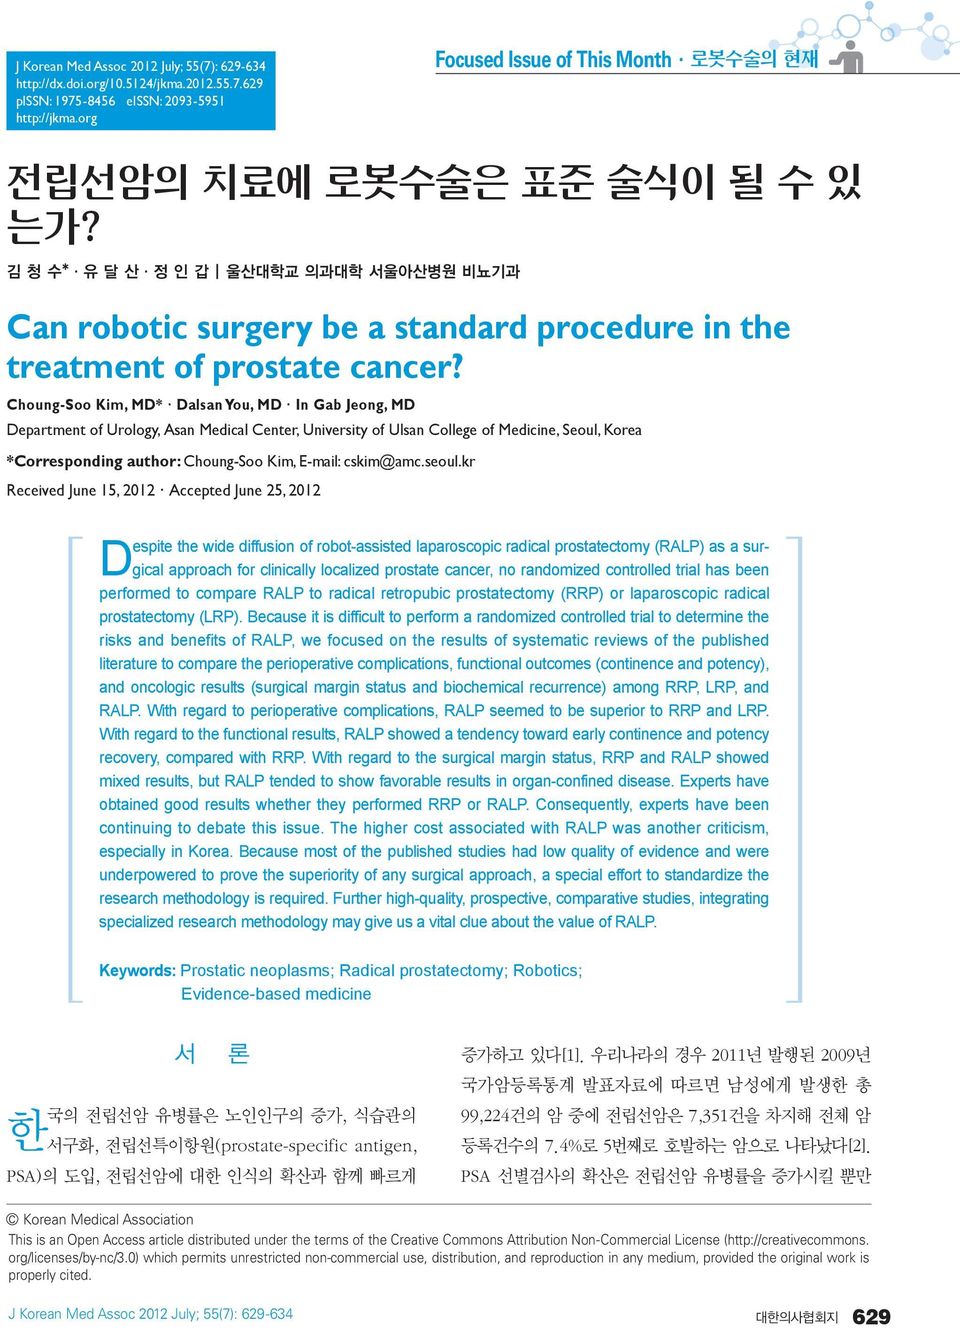 Choung-Soo Kim, MD* Dalsan You, MD In Gab Jeong, MD Department of Urology, Asan Medical Center, University of Ulsan College of Medicine, Seoul, Korea *Corresponding author: Choung-Soo Kim, E-mail: